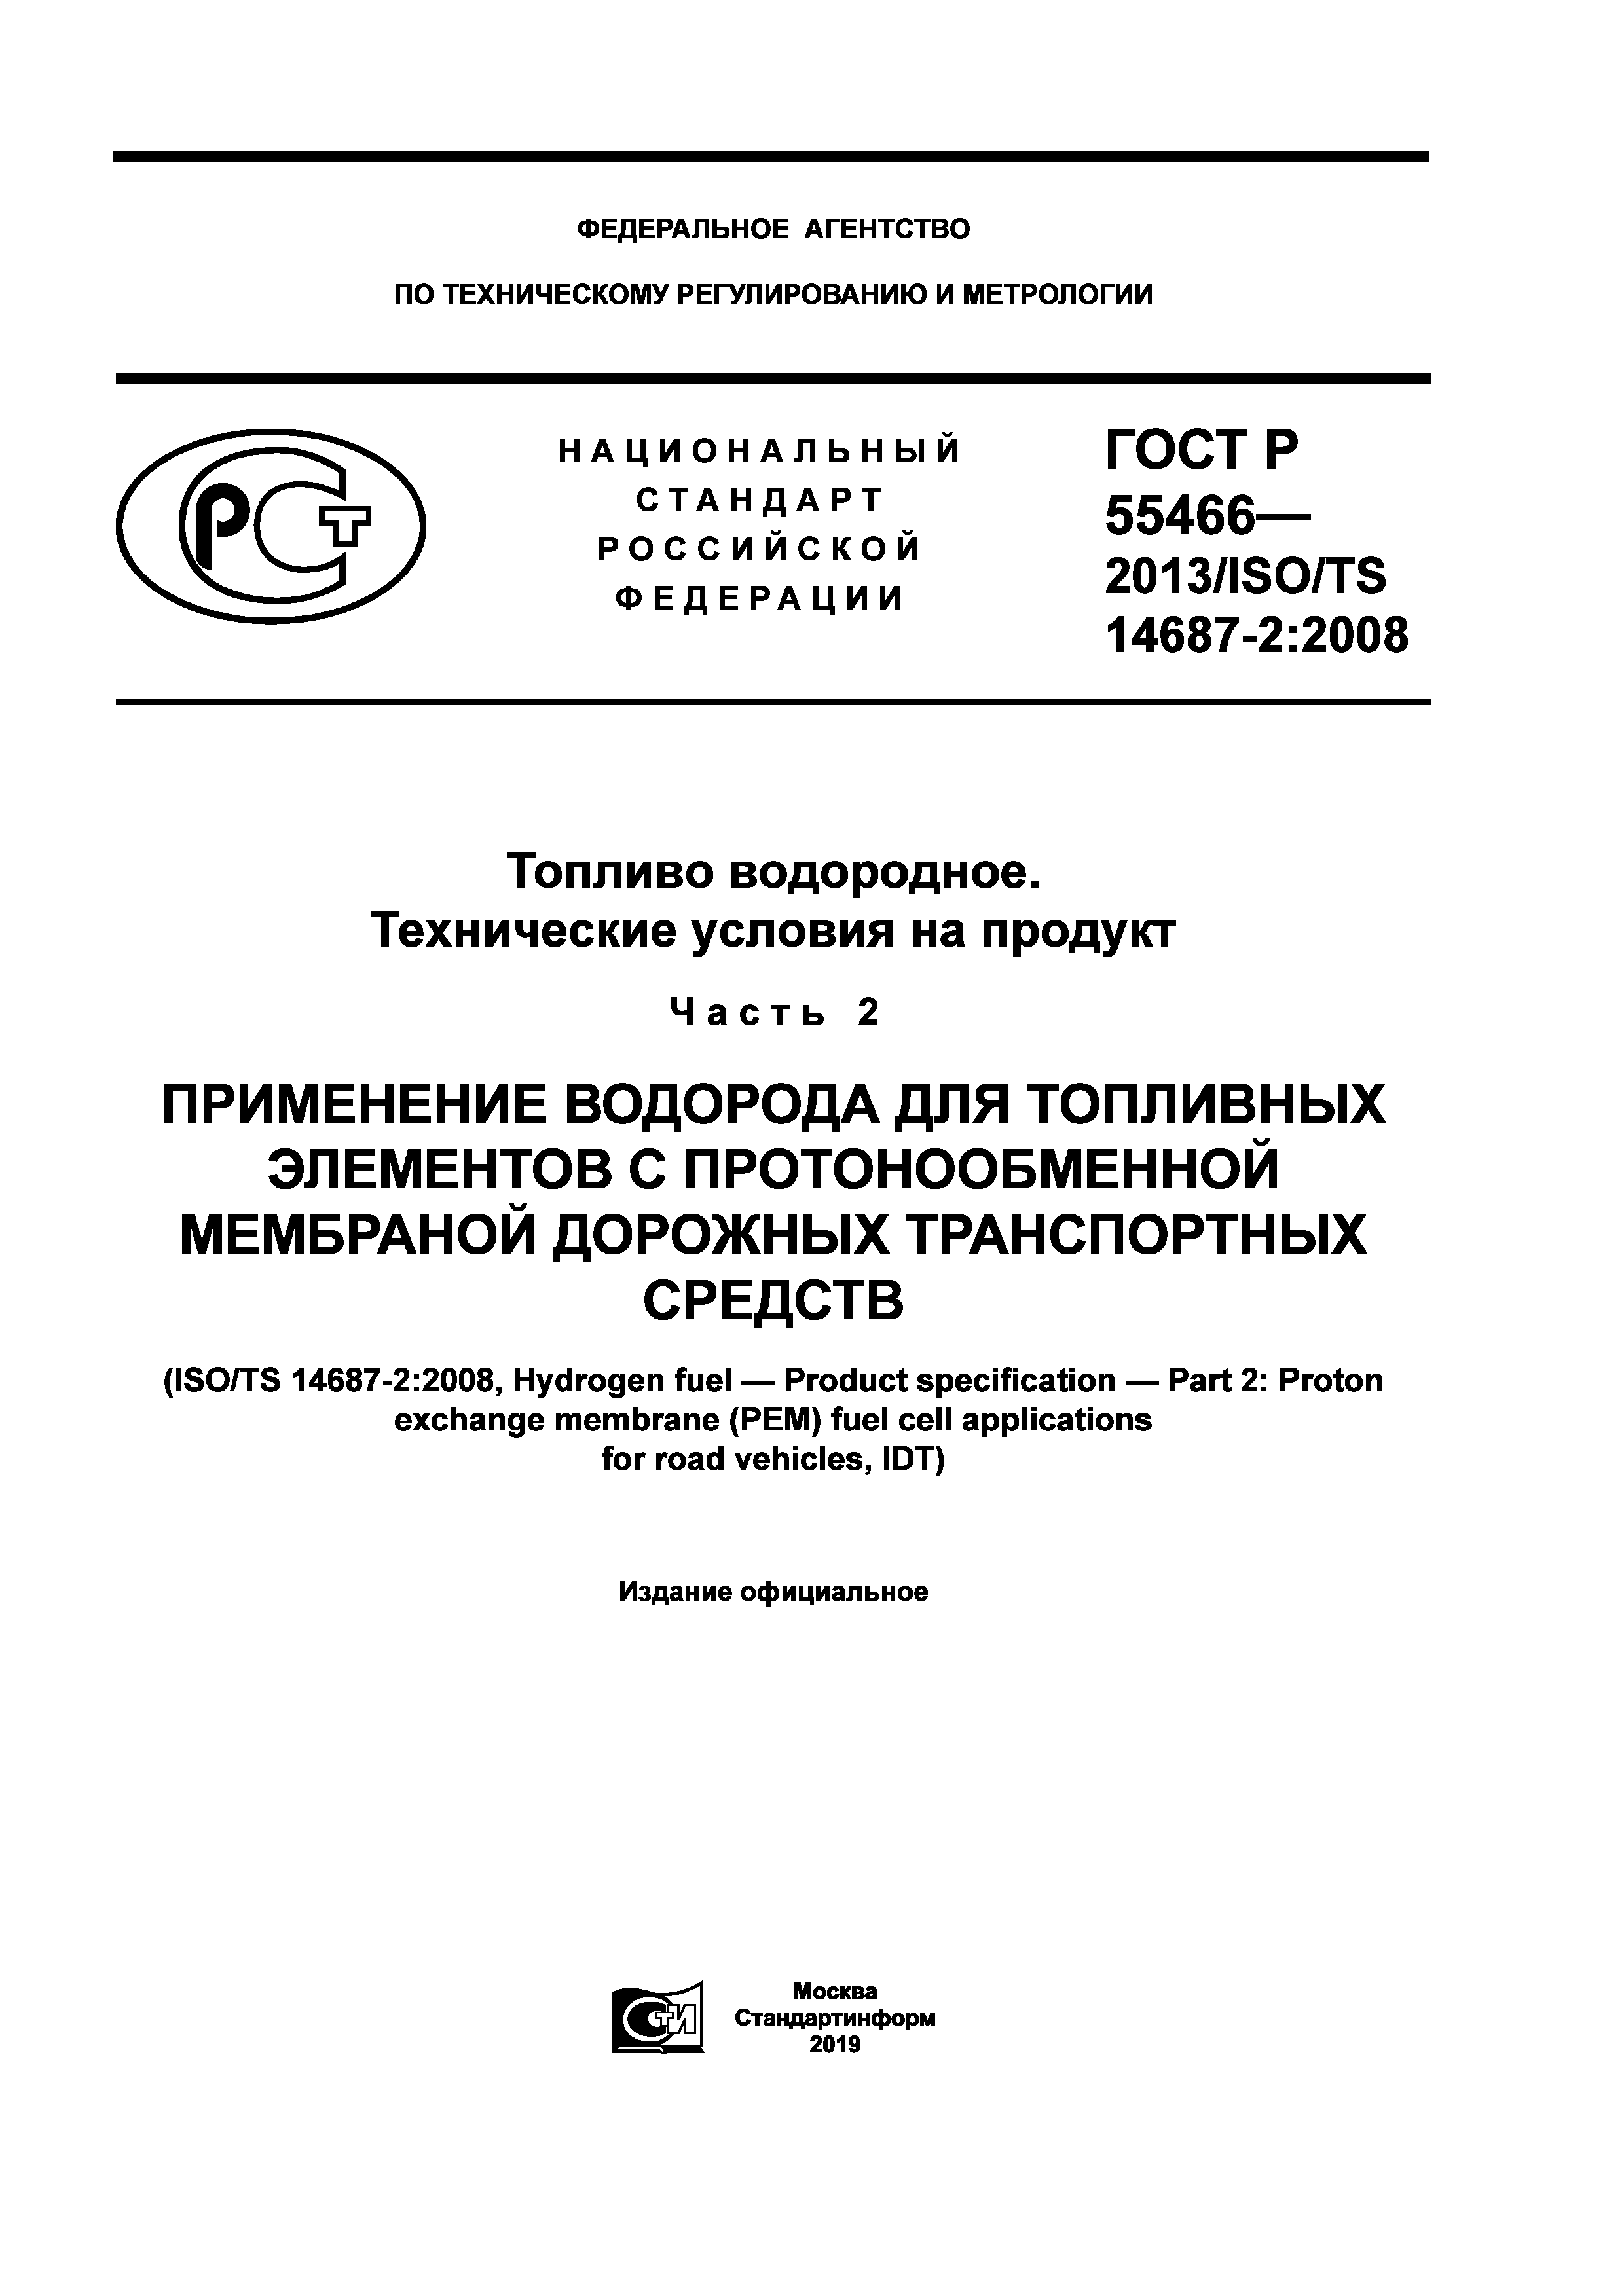 ГОСТ Р 55466-2013